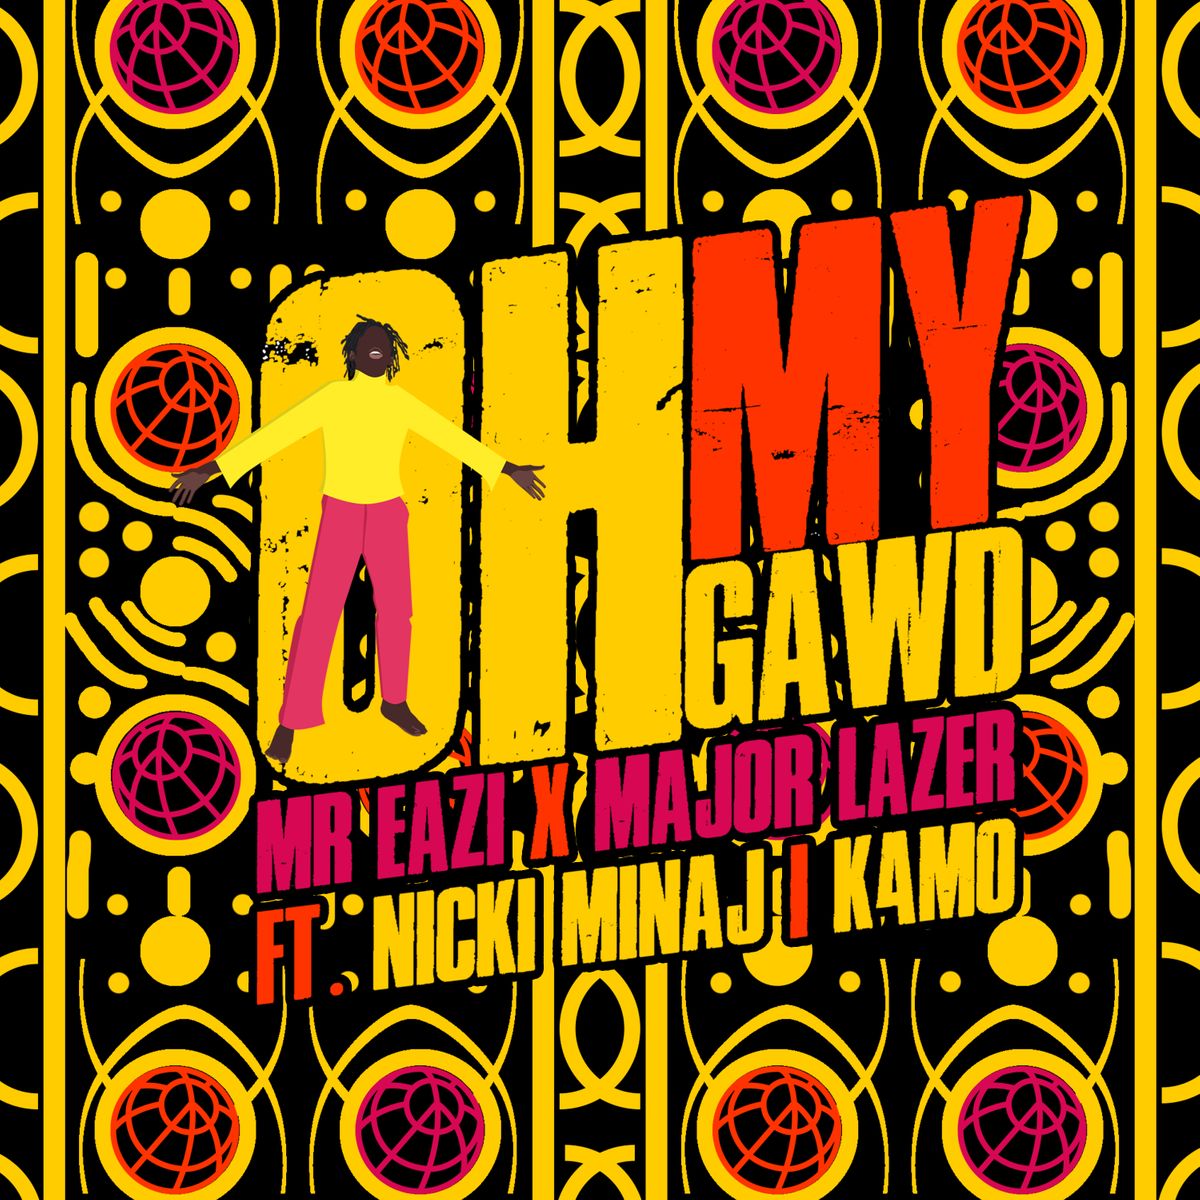 Mr Eazi & Major Lazer ft. Nicki Minaj & K4mo - Oh My Gawd